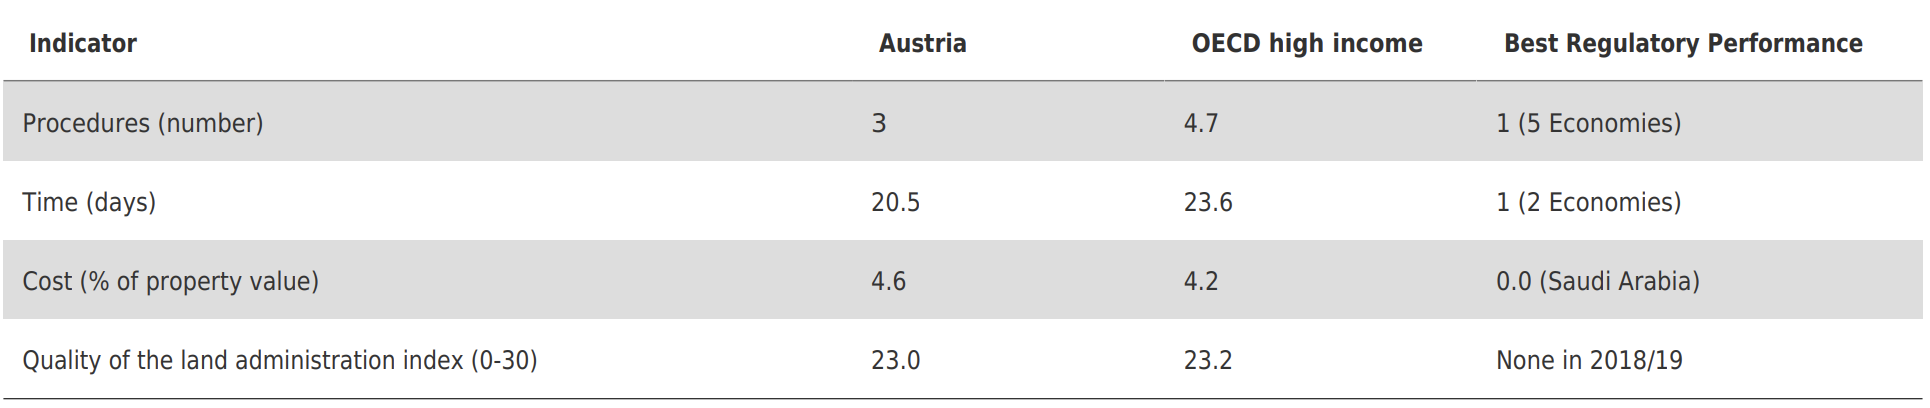 Registering Property - Austria